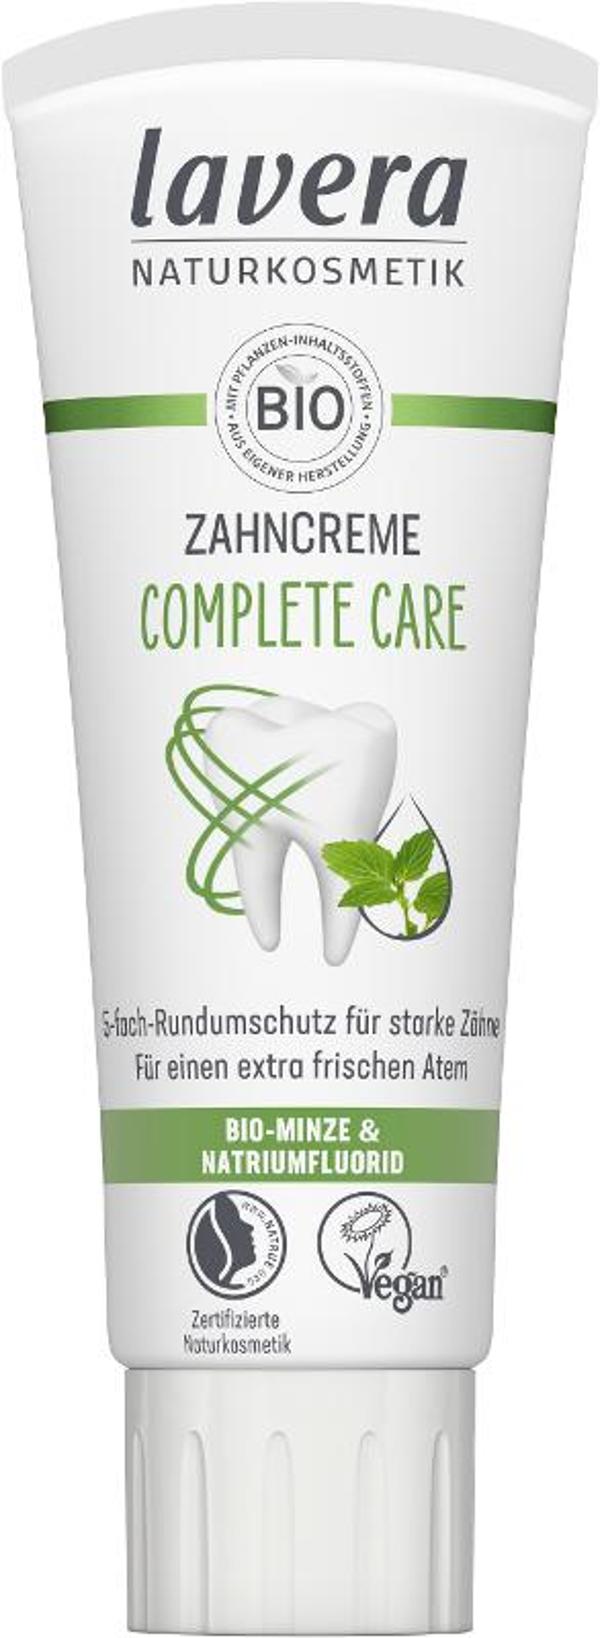 Produktfoto zu Zahncreme Complete Care